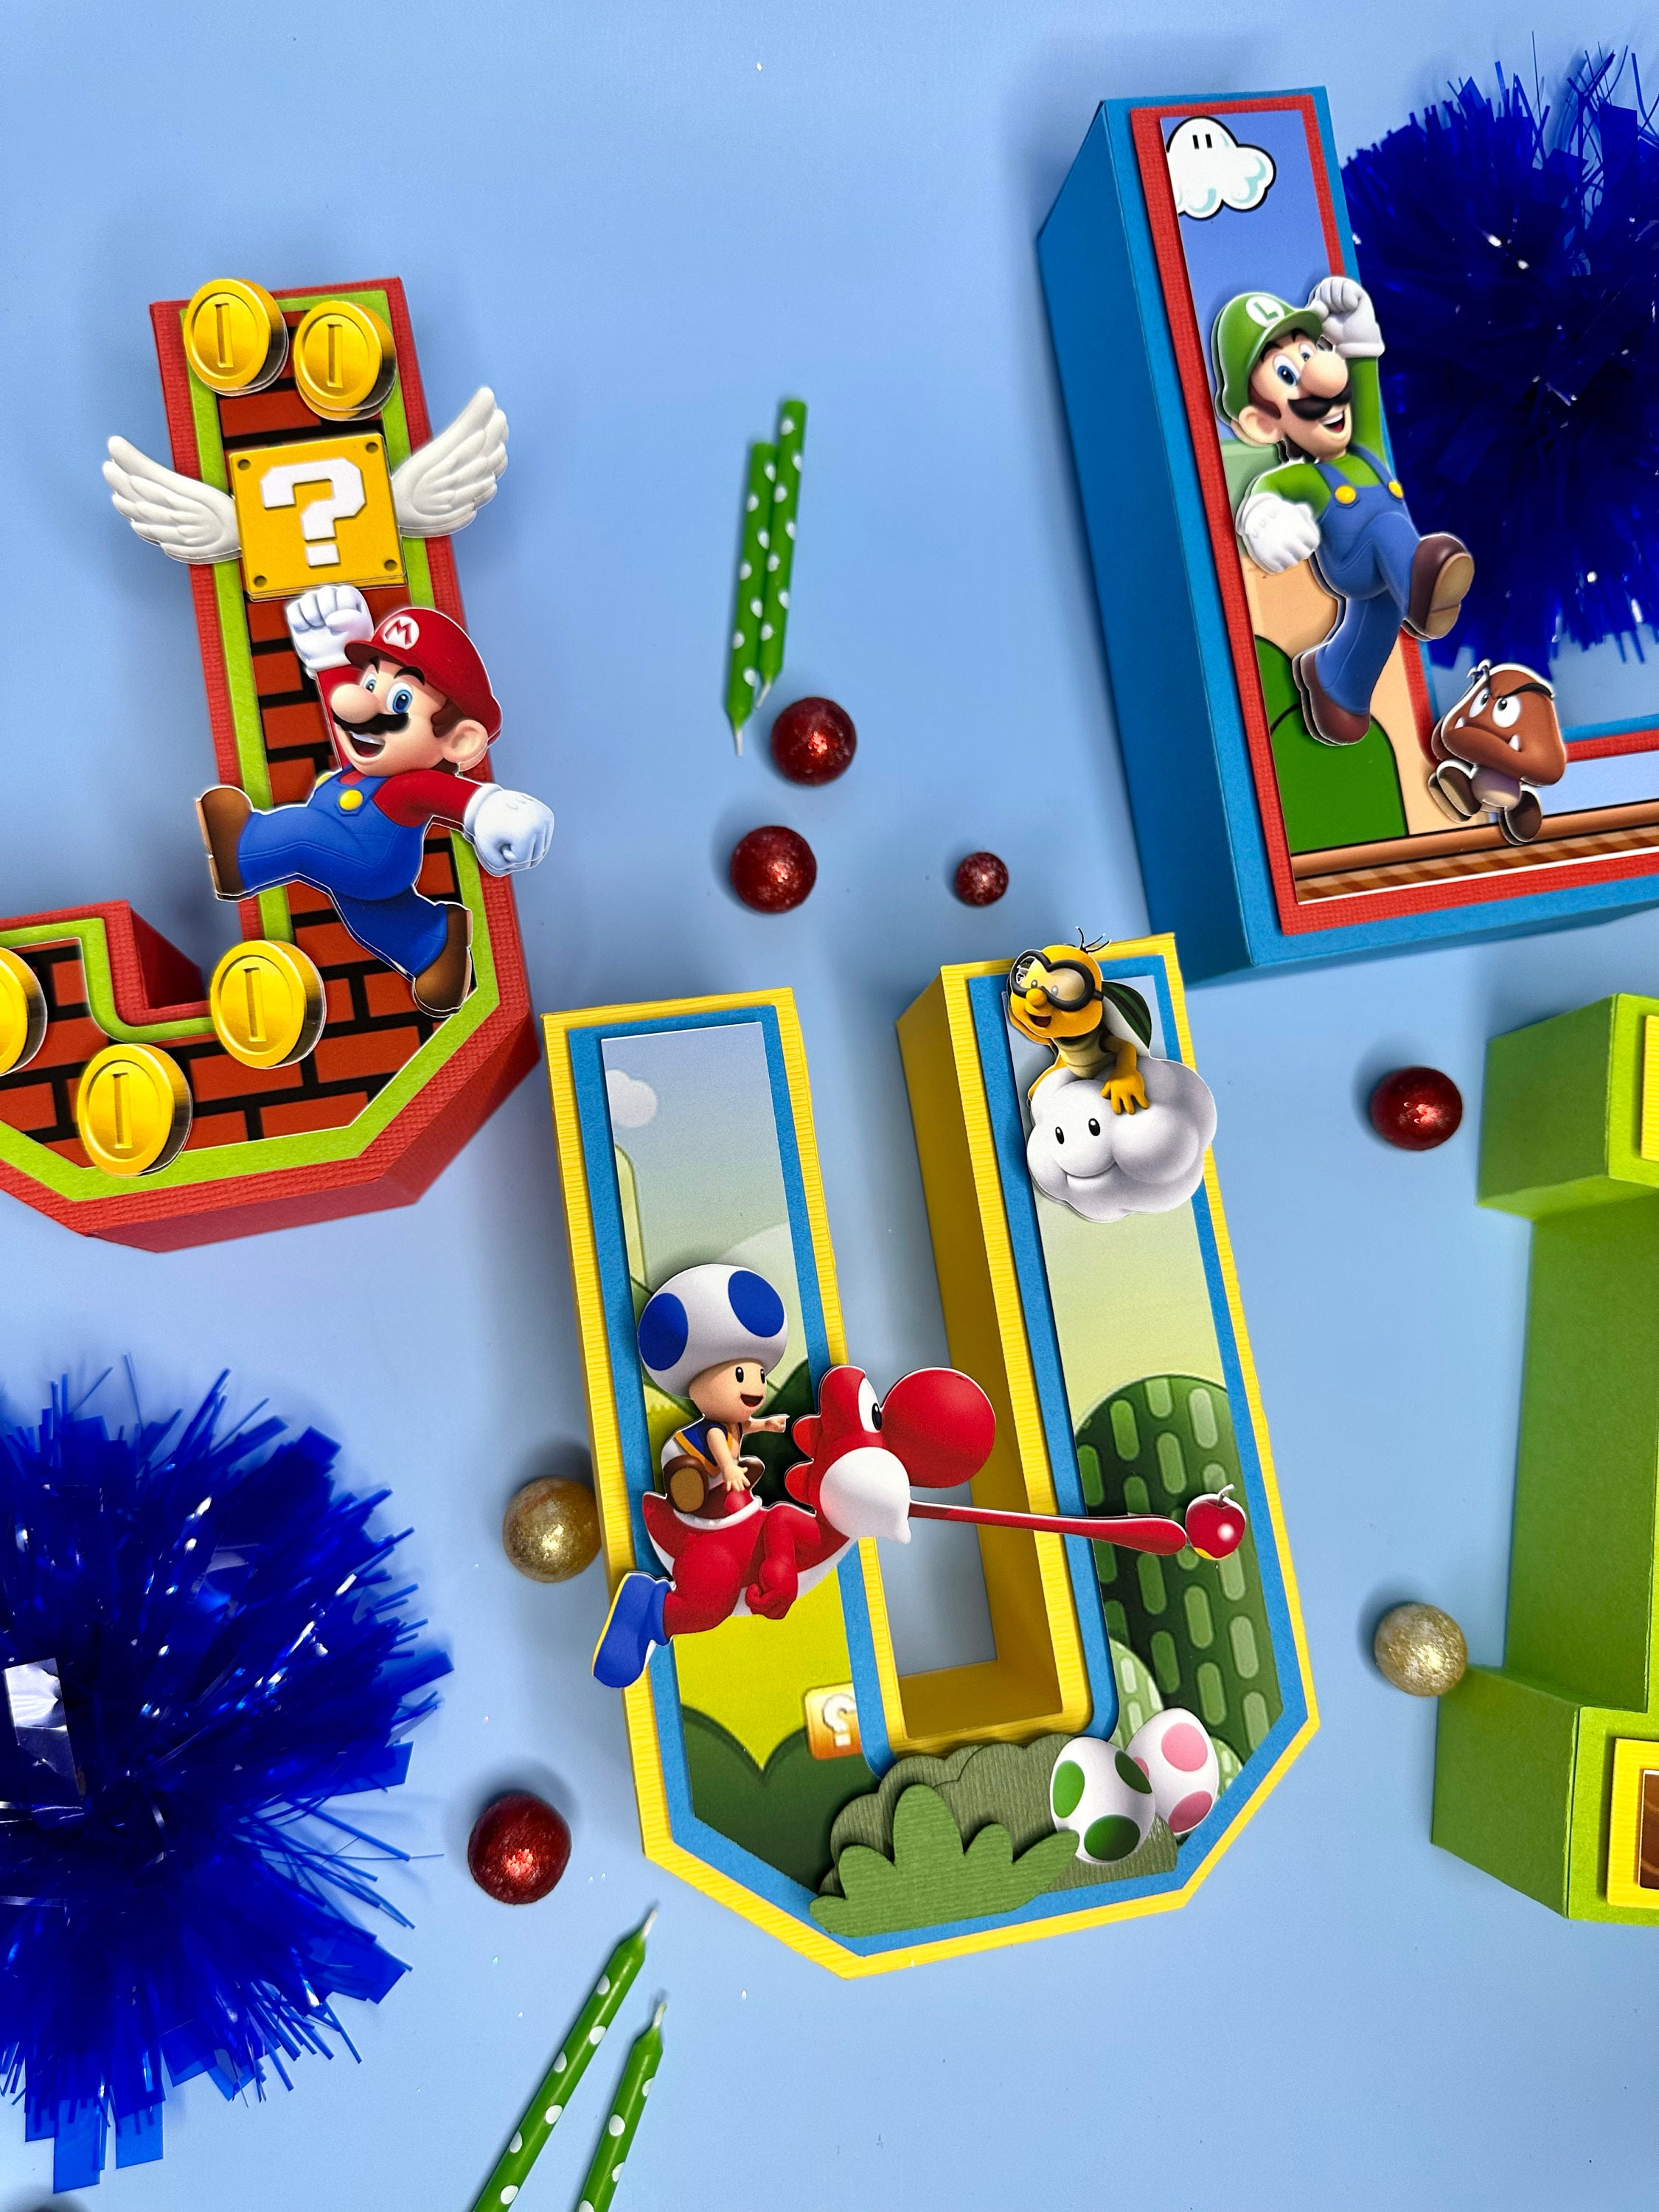 Bougies d'anniversaire Super Mario Deluxe, paquet de 4 > Mariage